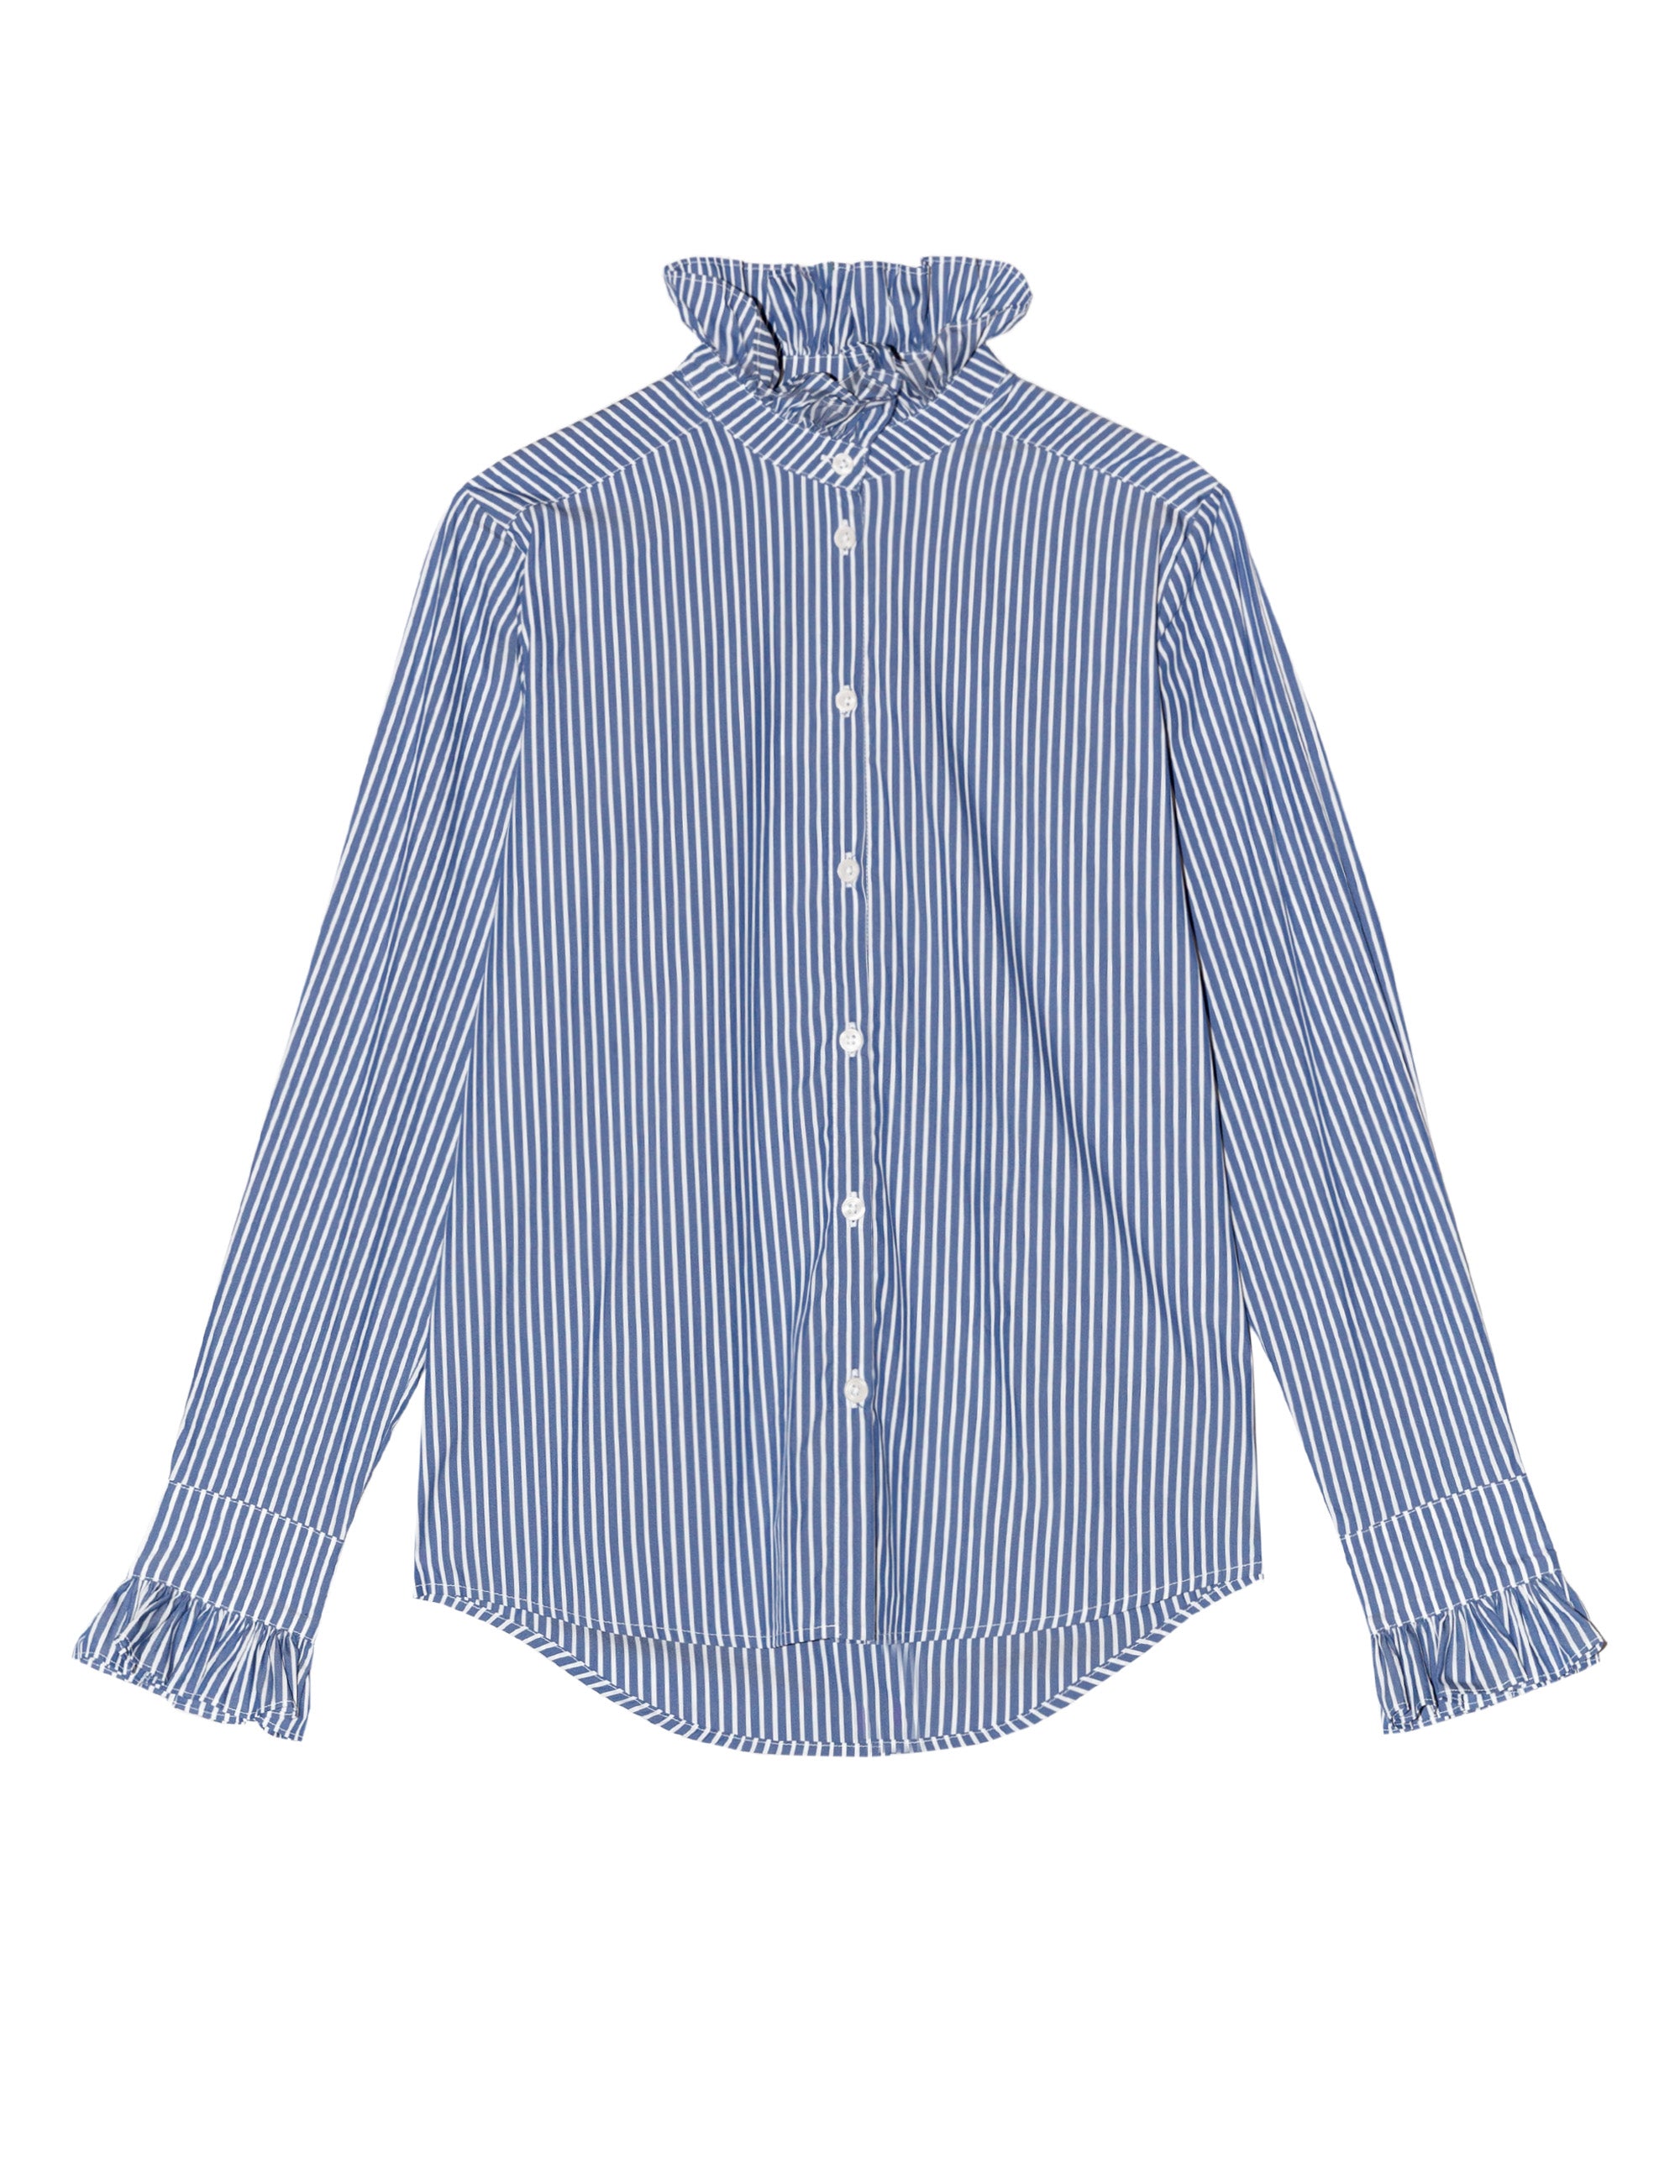 APOF classic shirt in striped cotton poplin